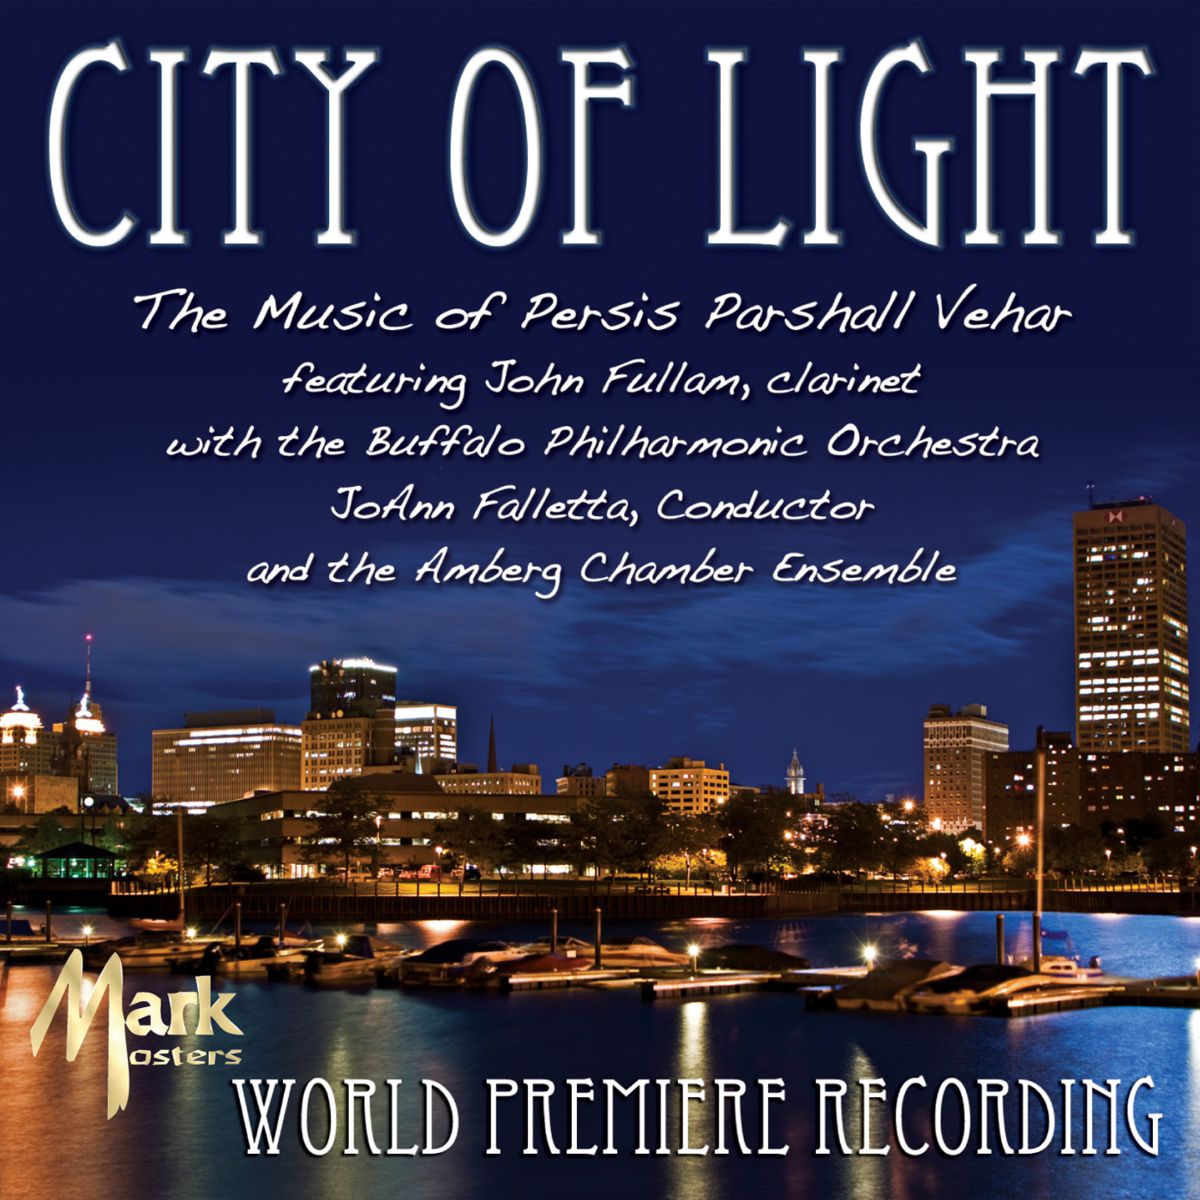 City of Light: The Music of Persis Parshall Vehar - klik hier